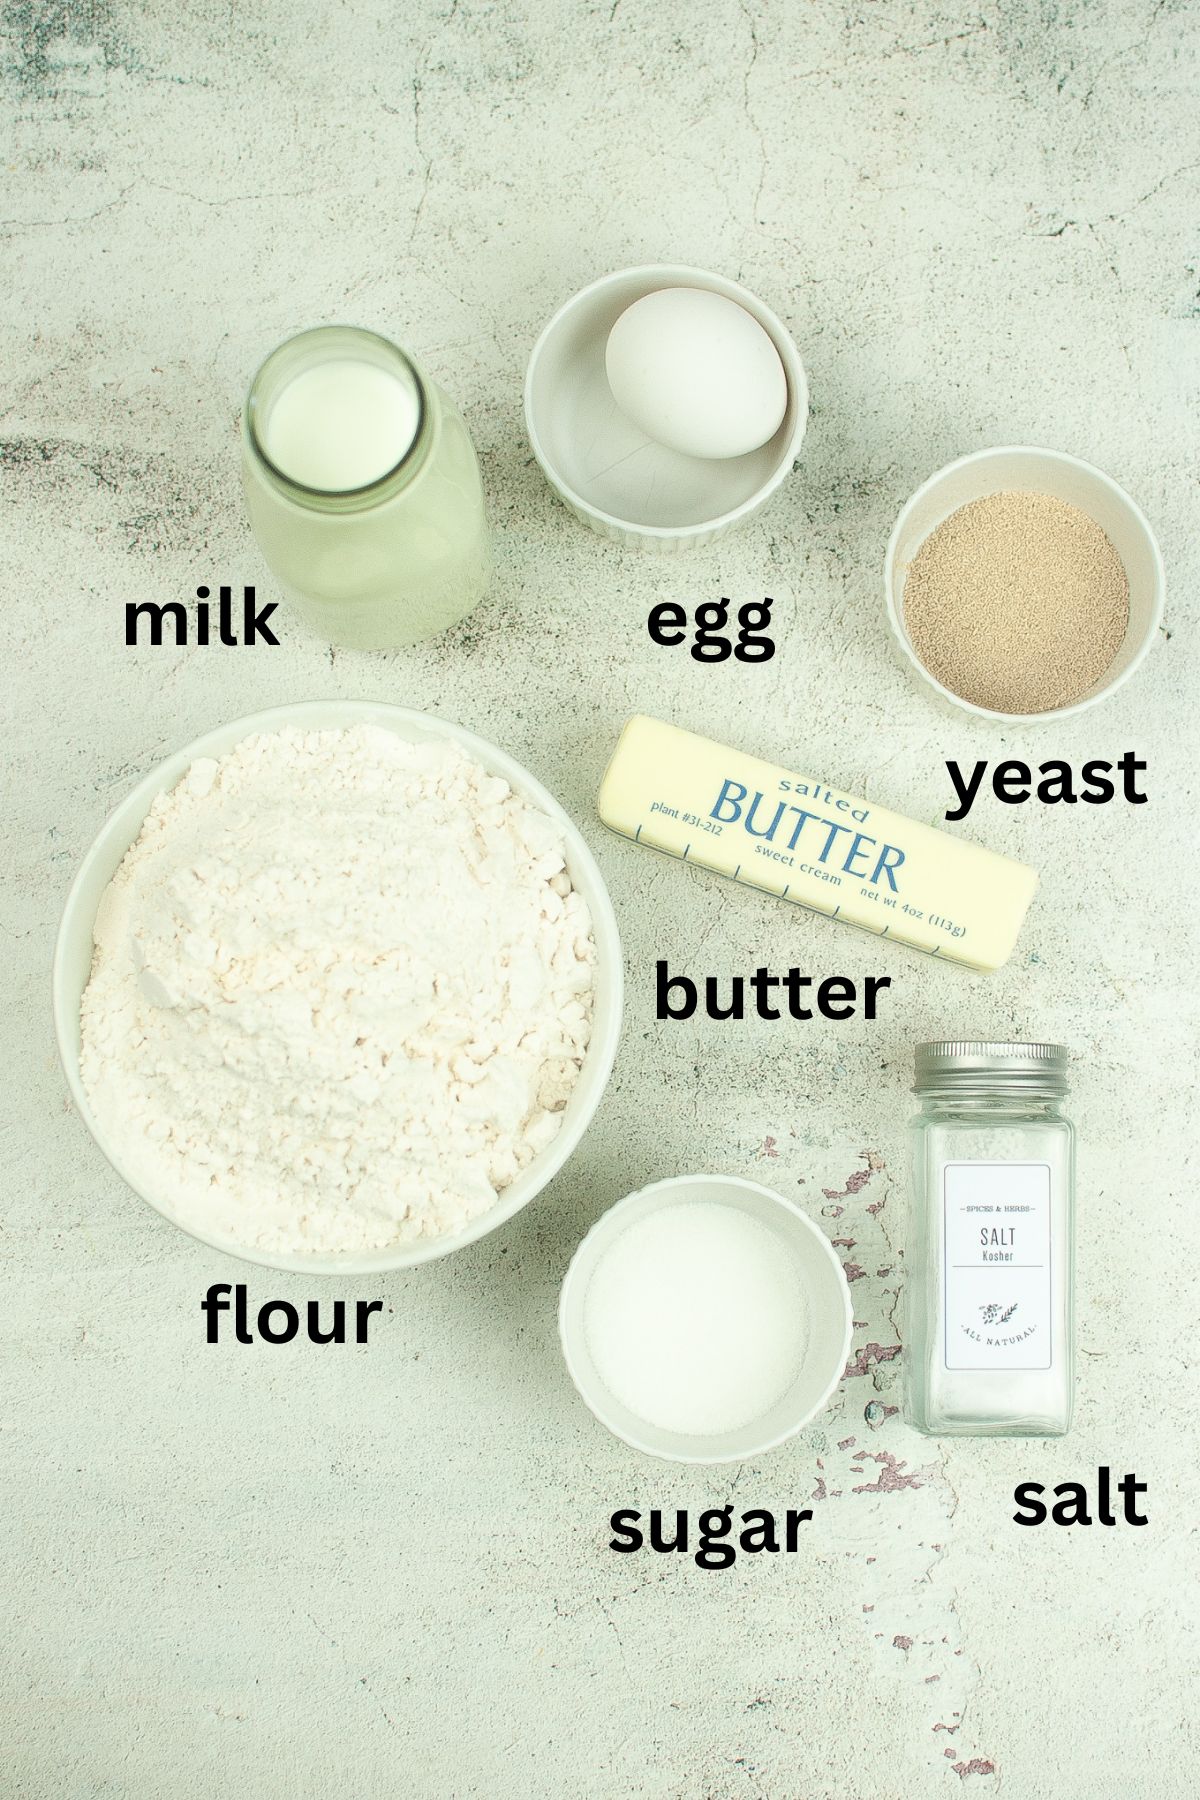 milk, egg, yeast, butter, flour, sugar, and salt on a textured background